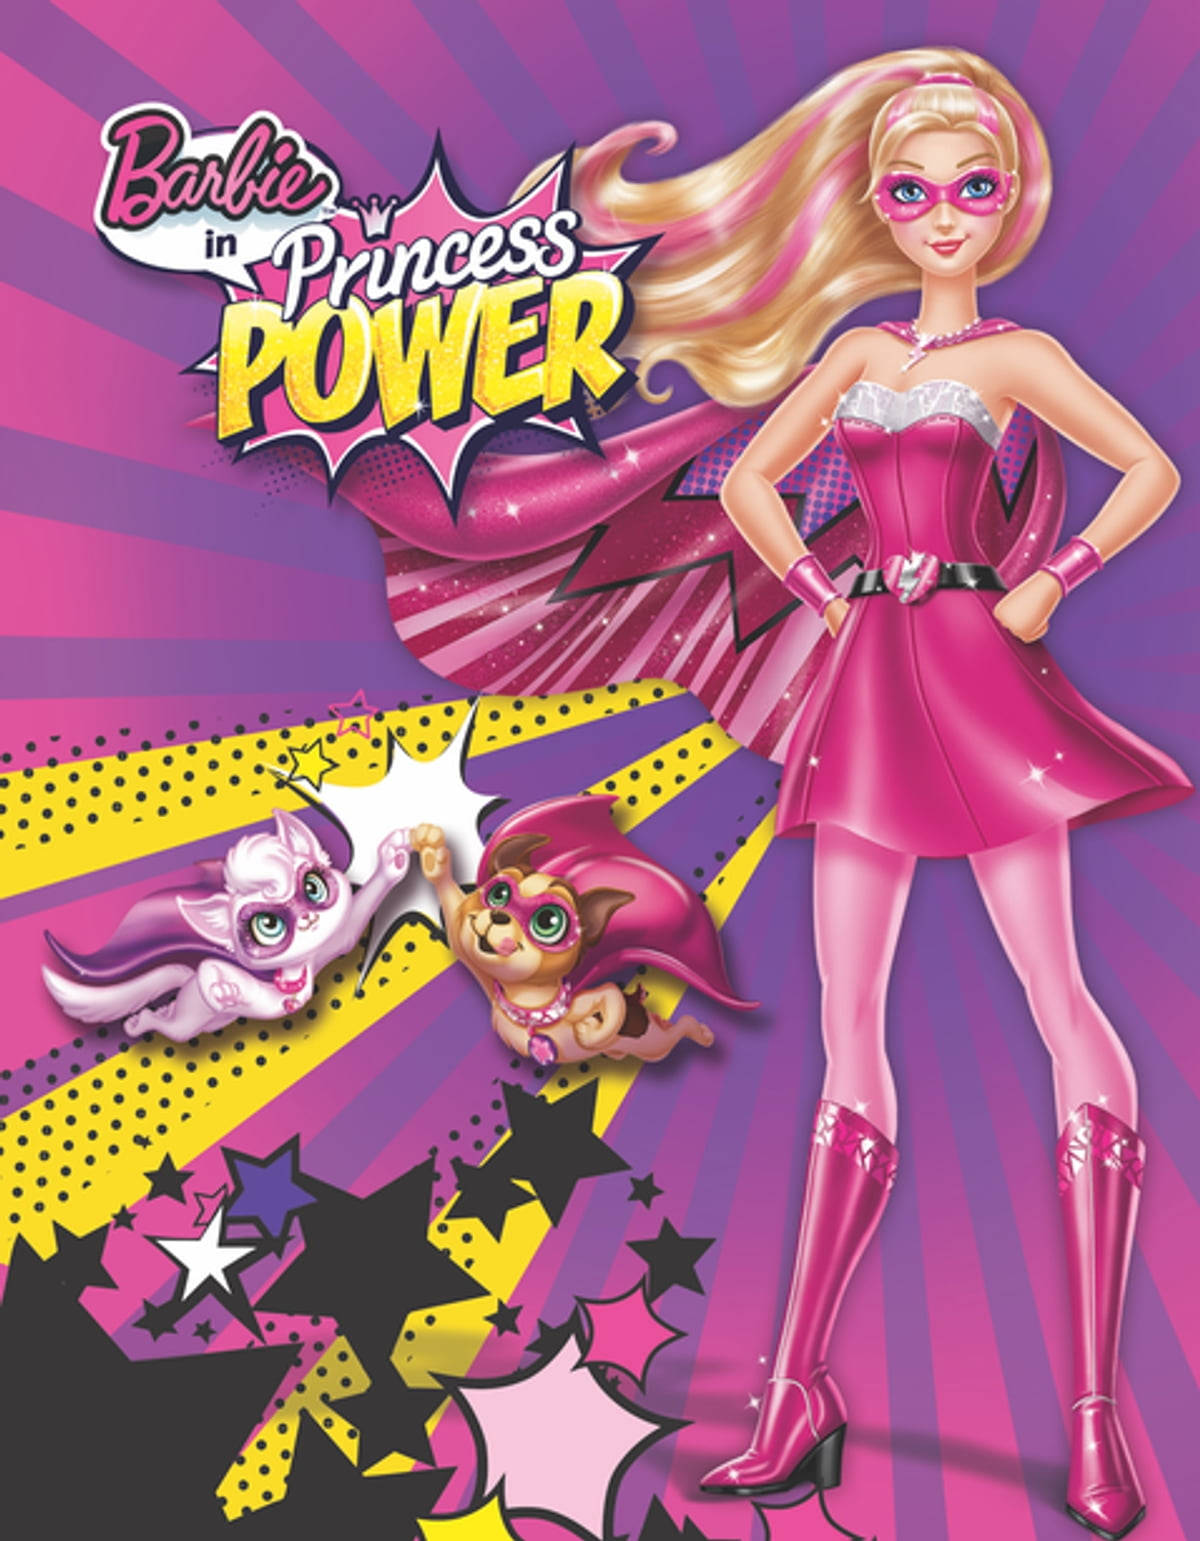 Barbie Princess Power Poster Background